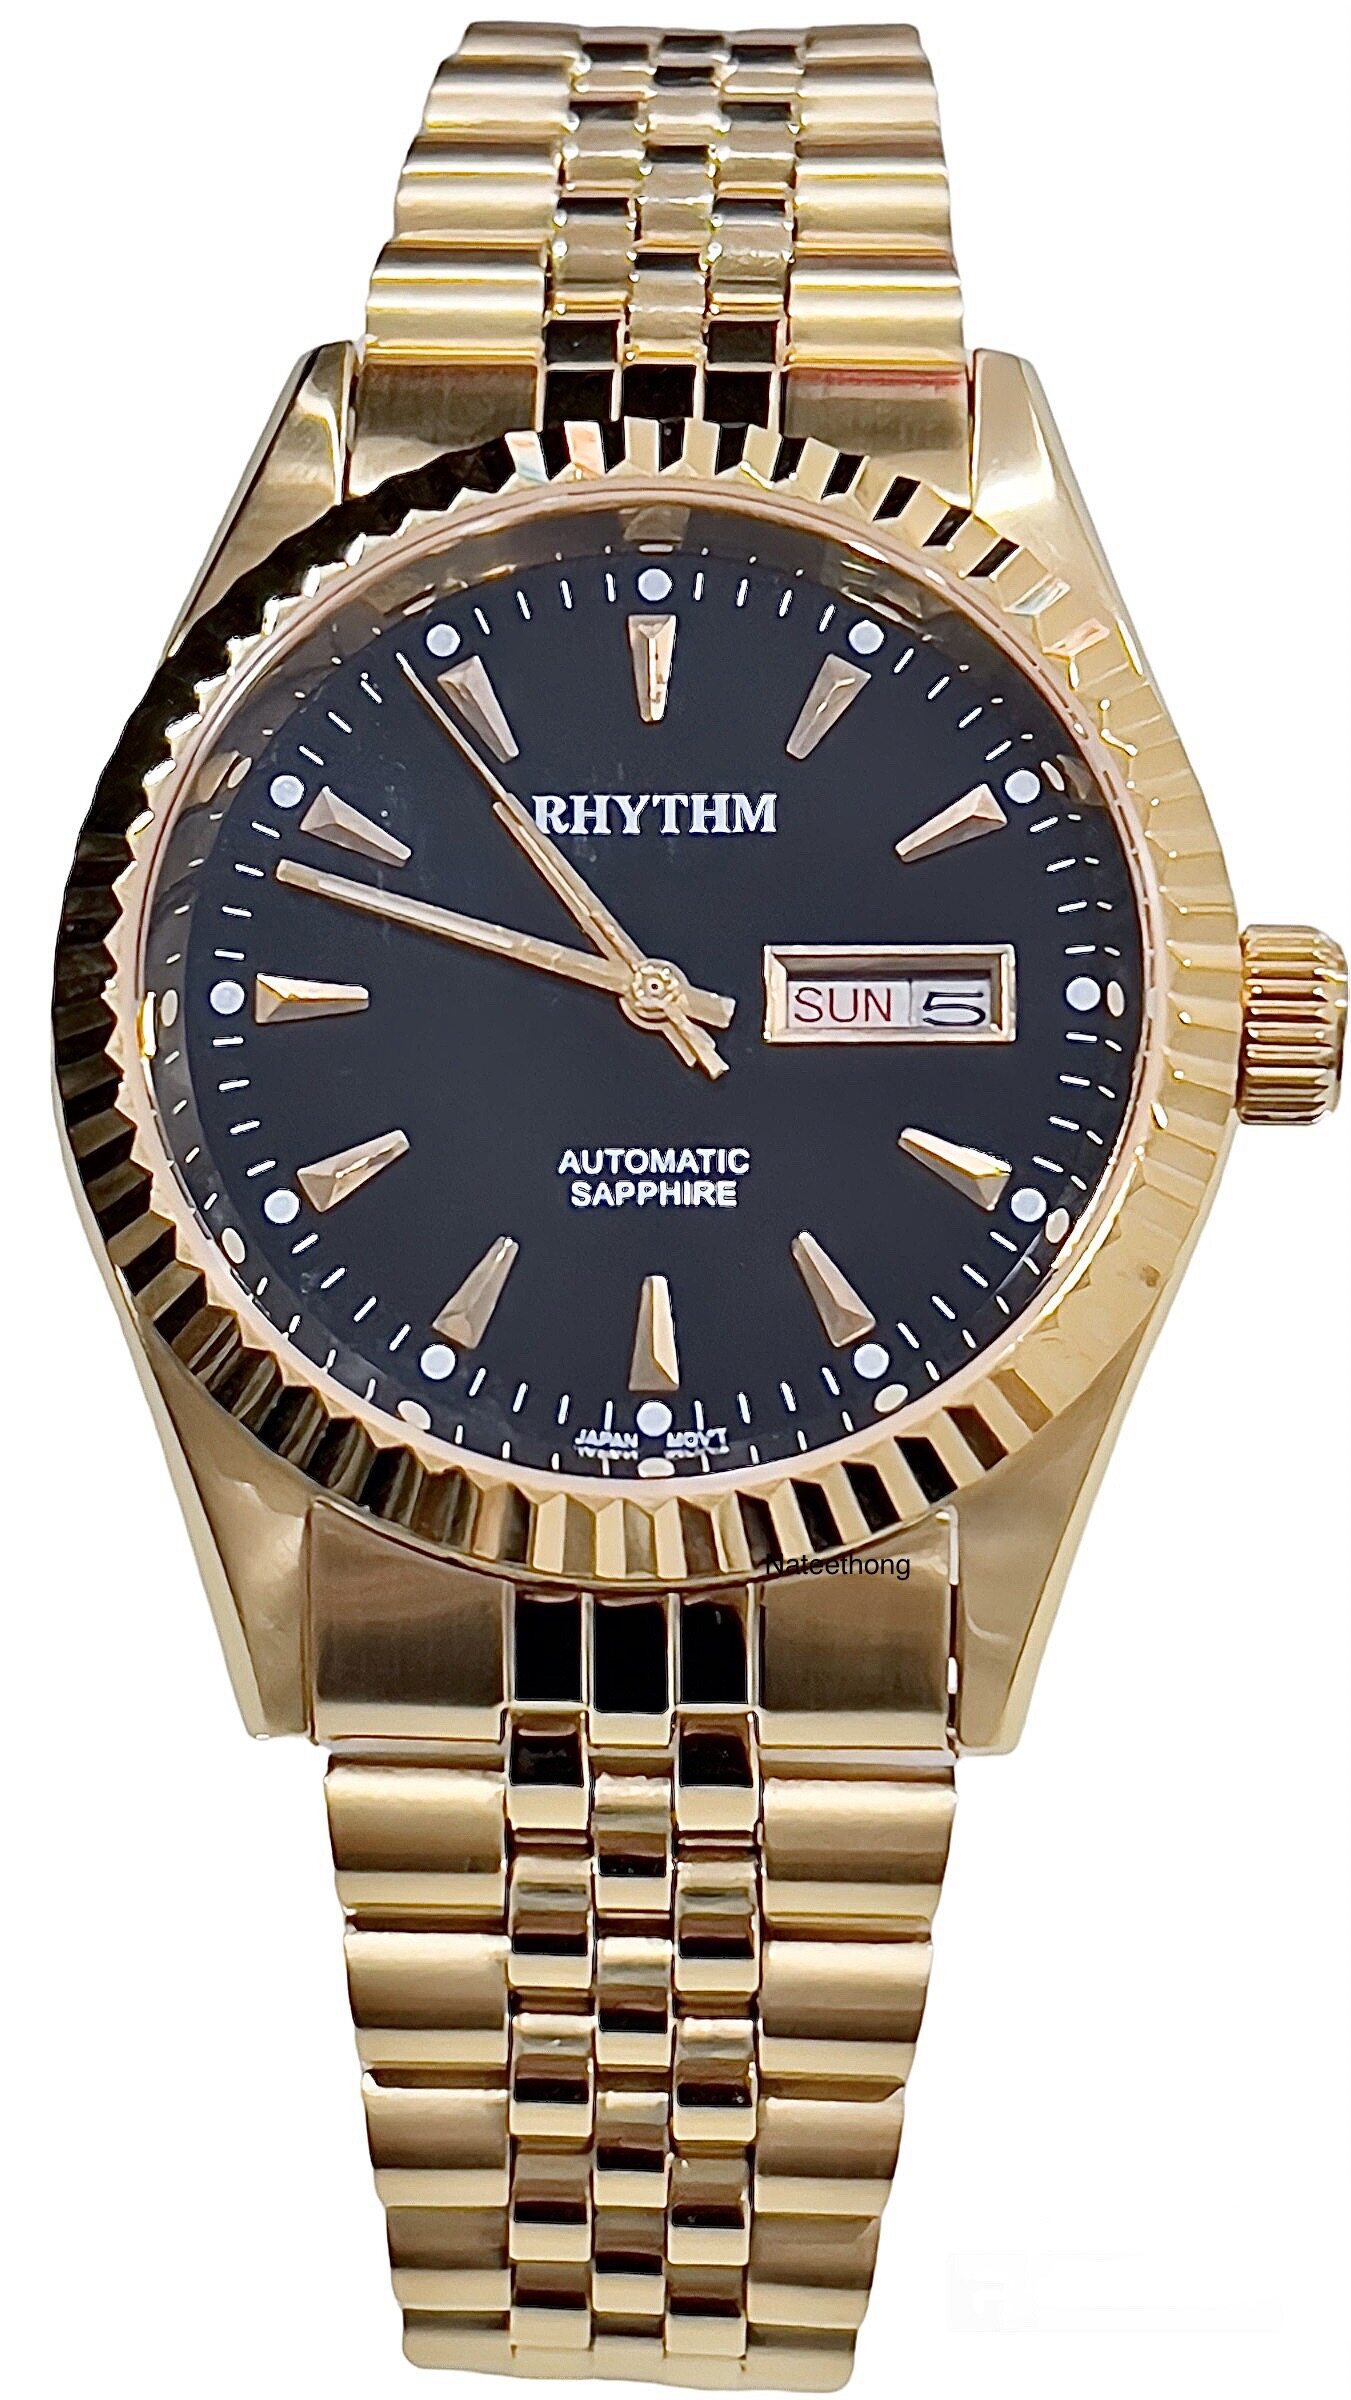 Rhythm Automatic Watch ราคาถูก ซื้อออนไลน์ที่ - พ.ย. 2023 | Lazada